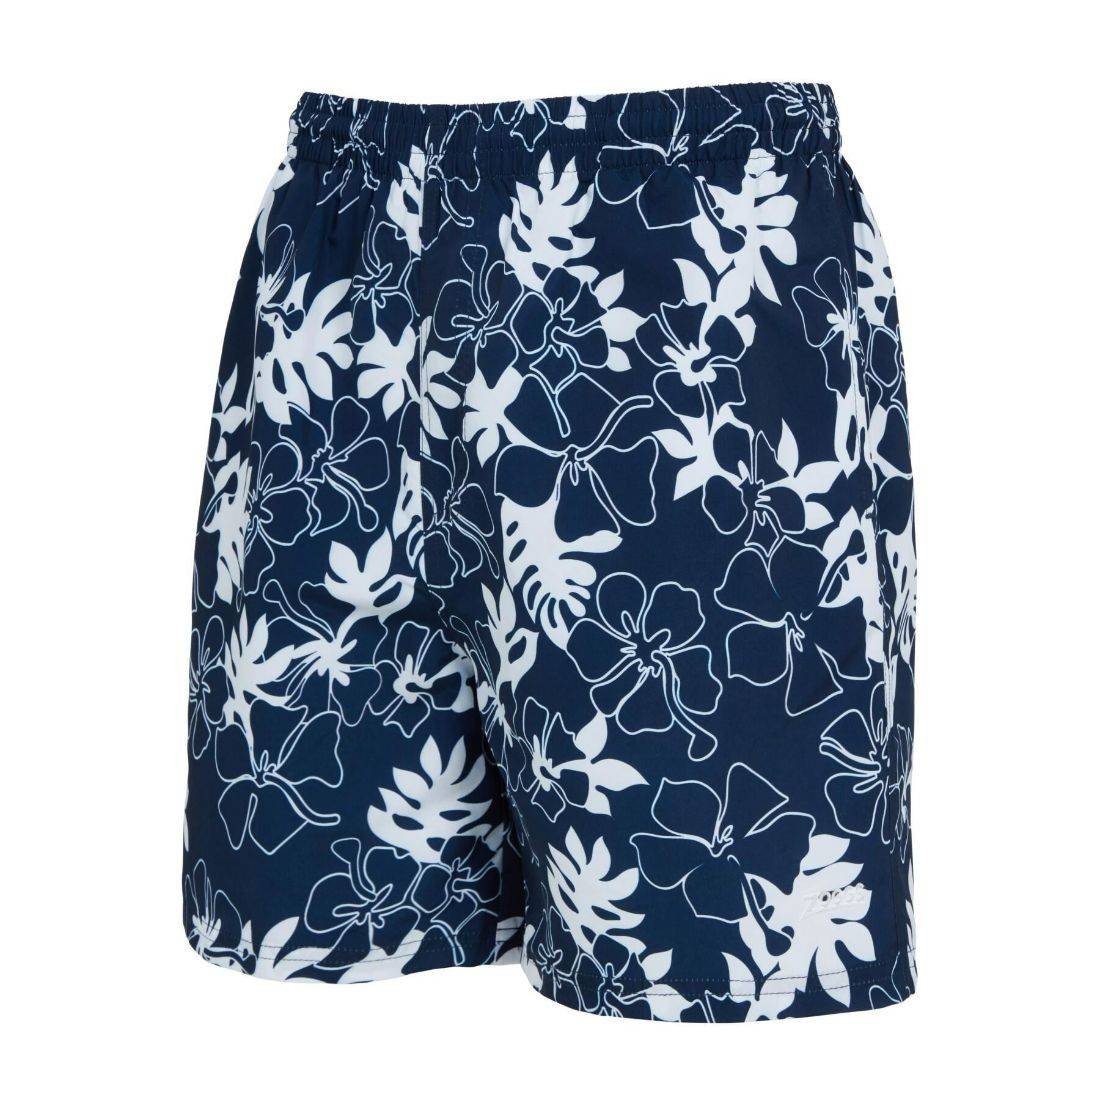 Shop Zoggs Aloha Print 16 inch Water Shorts ED Men Swimwear - Zoggs ...